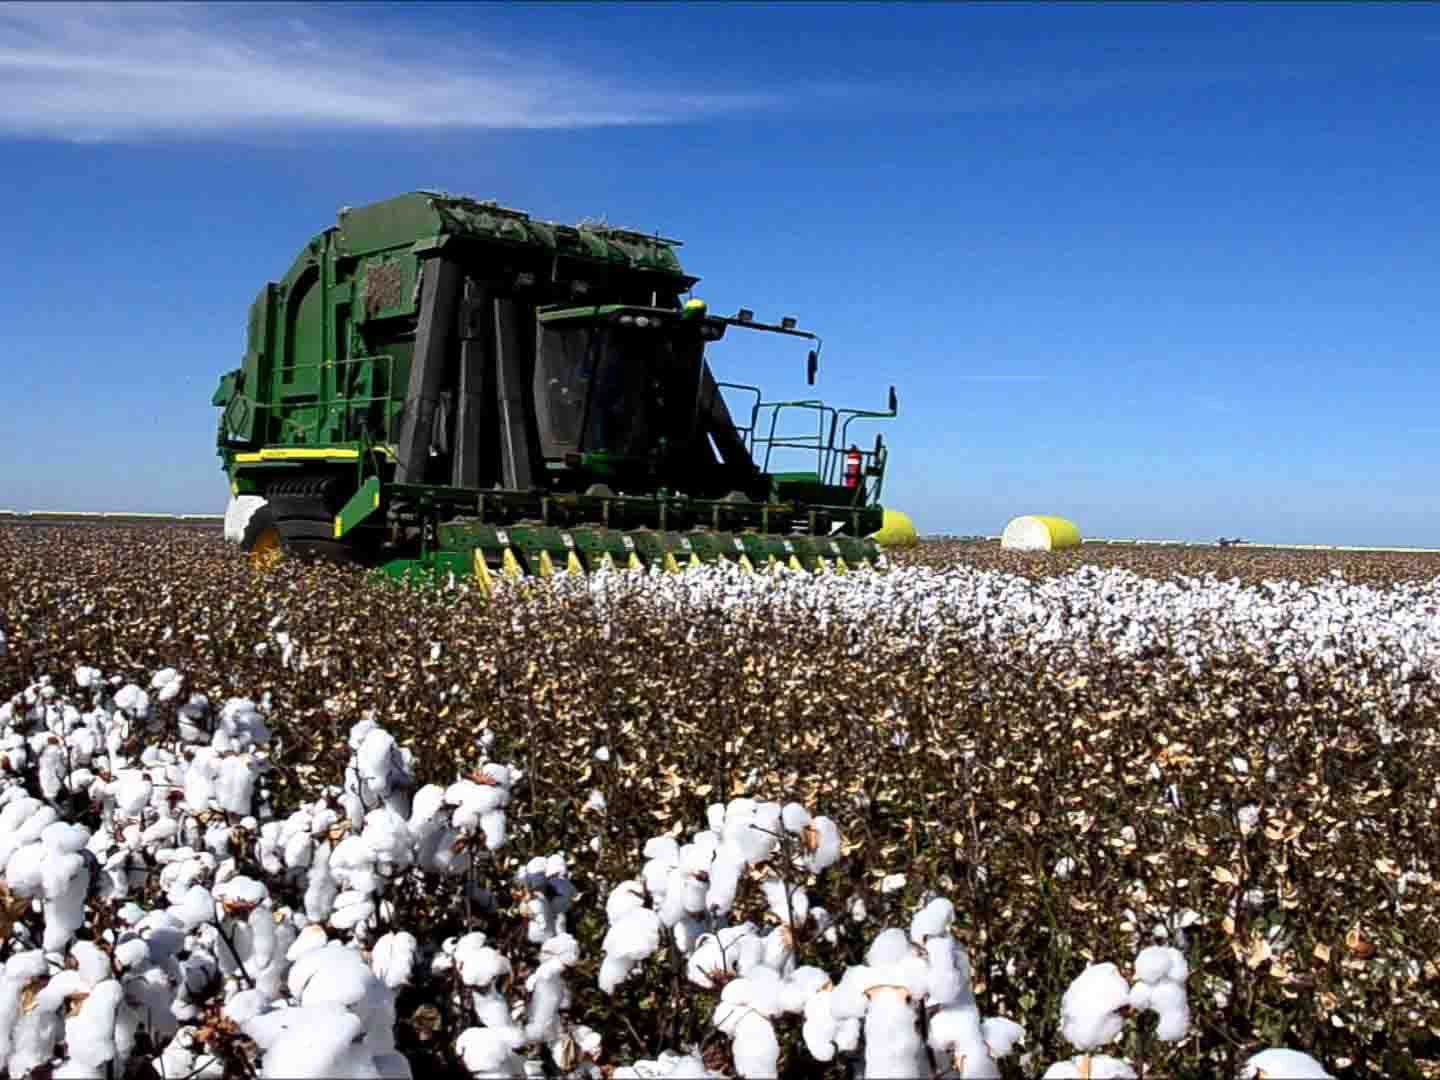 Cotton Production in Thousand Metric Tonnes: 501